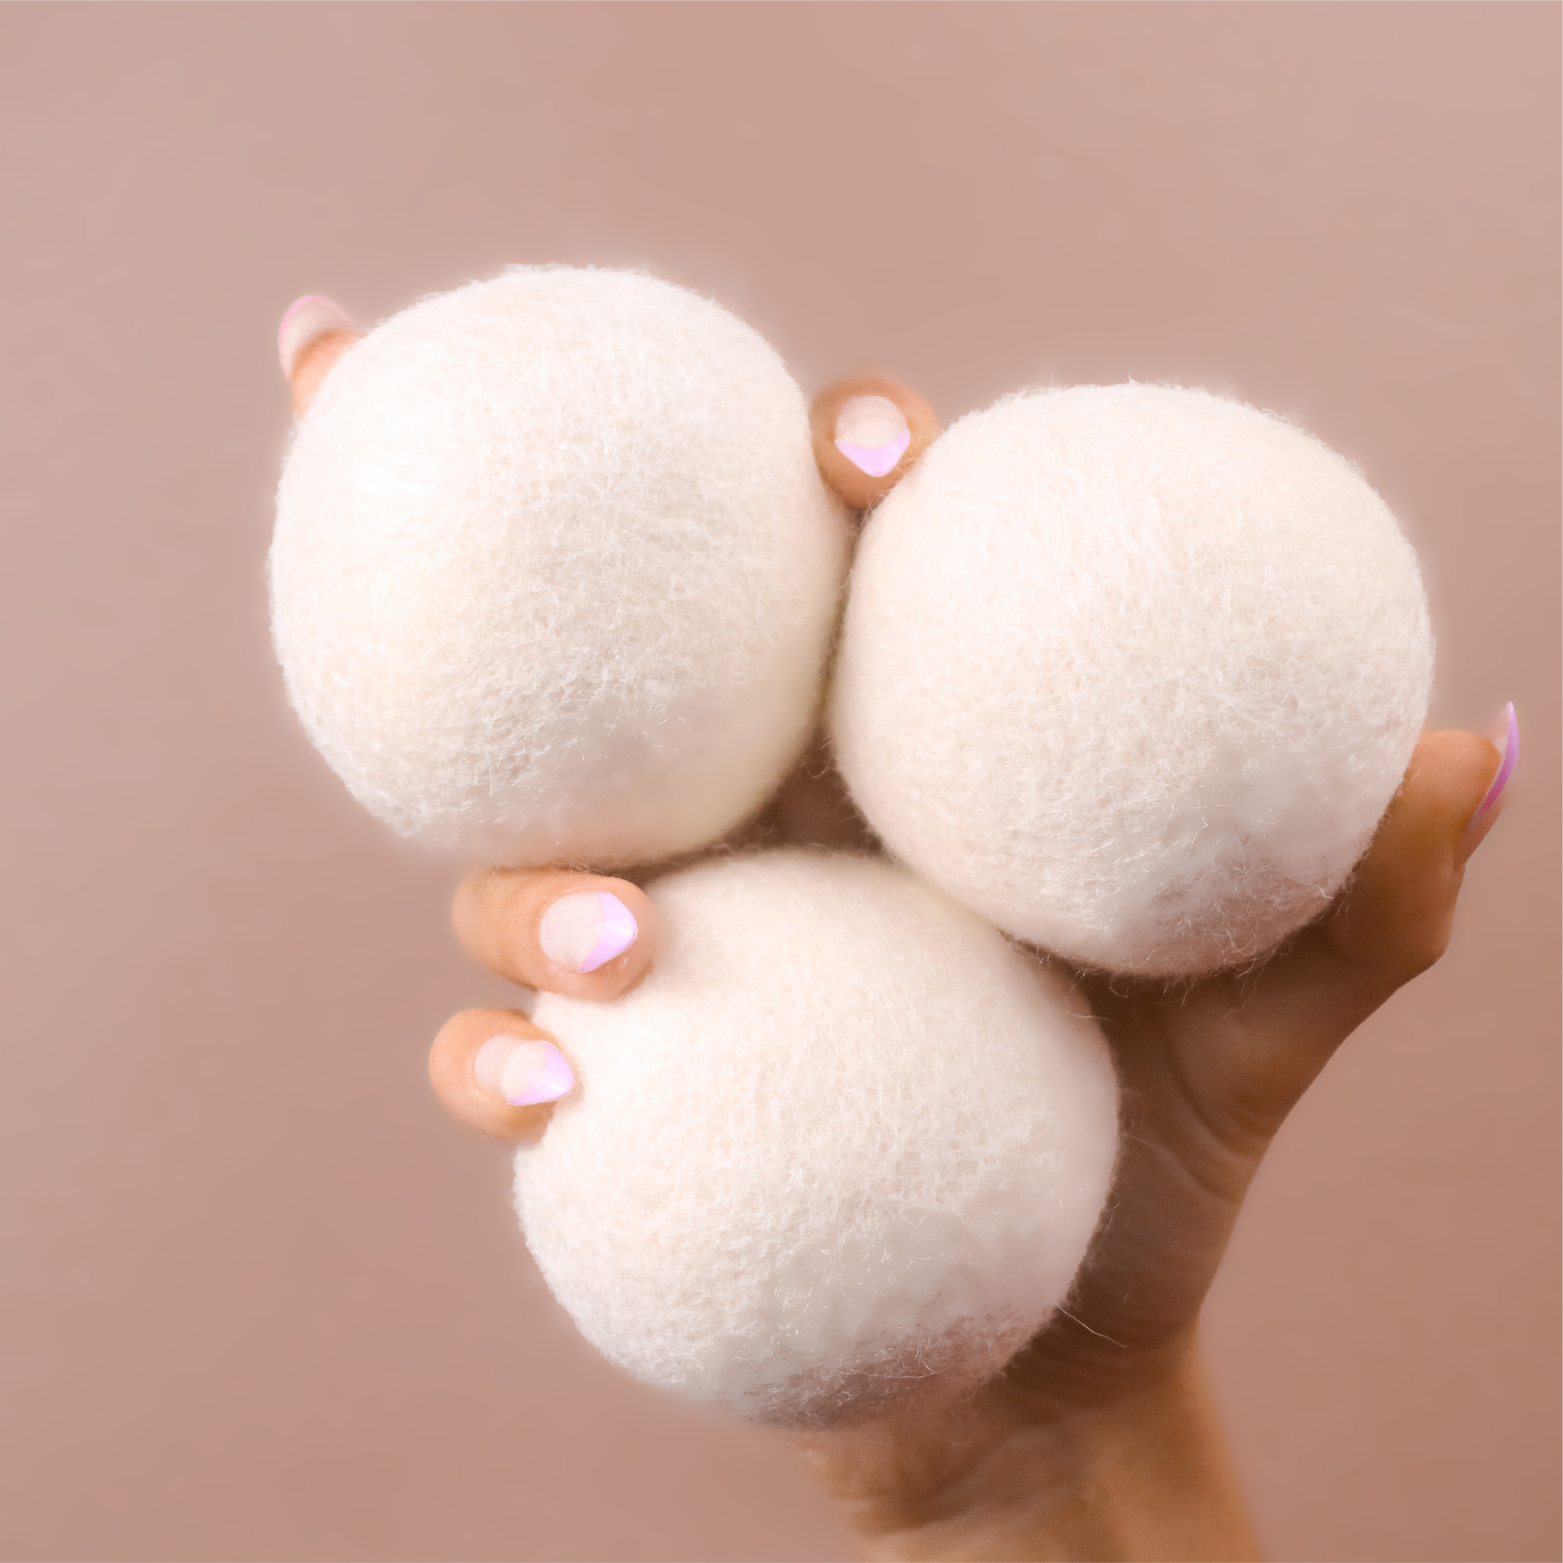 6 Benefits of Wool Dryer Balls - Kind Laundry